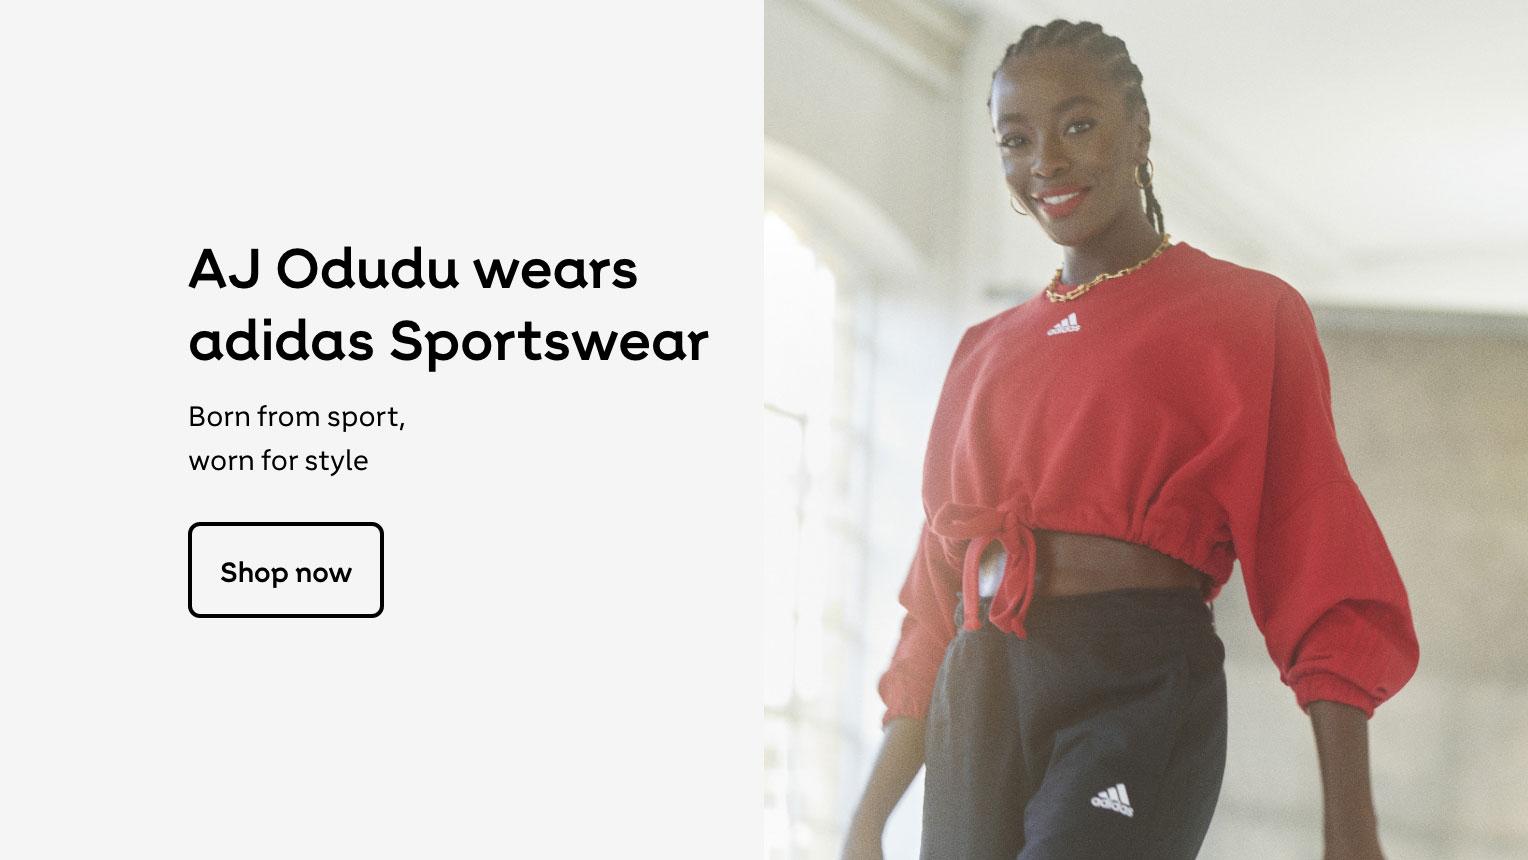 AJ Odudu wears adidas Sportswear. Born from sport, worn for style. Shop now.